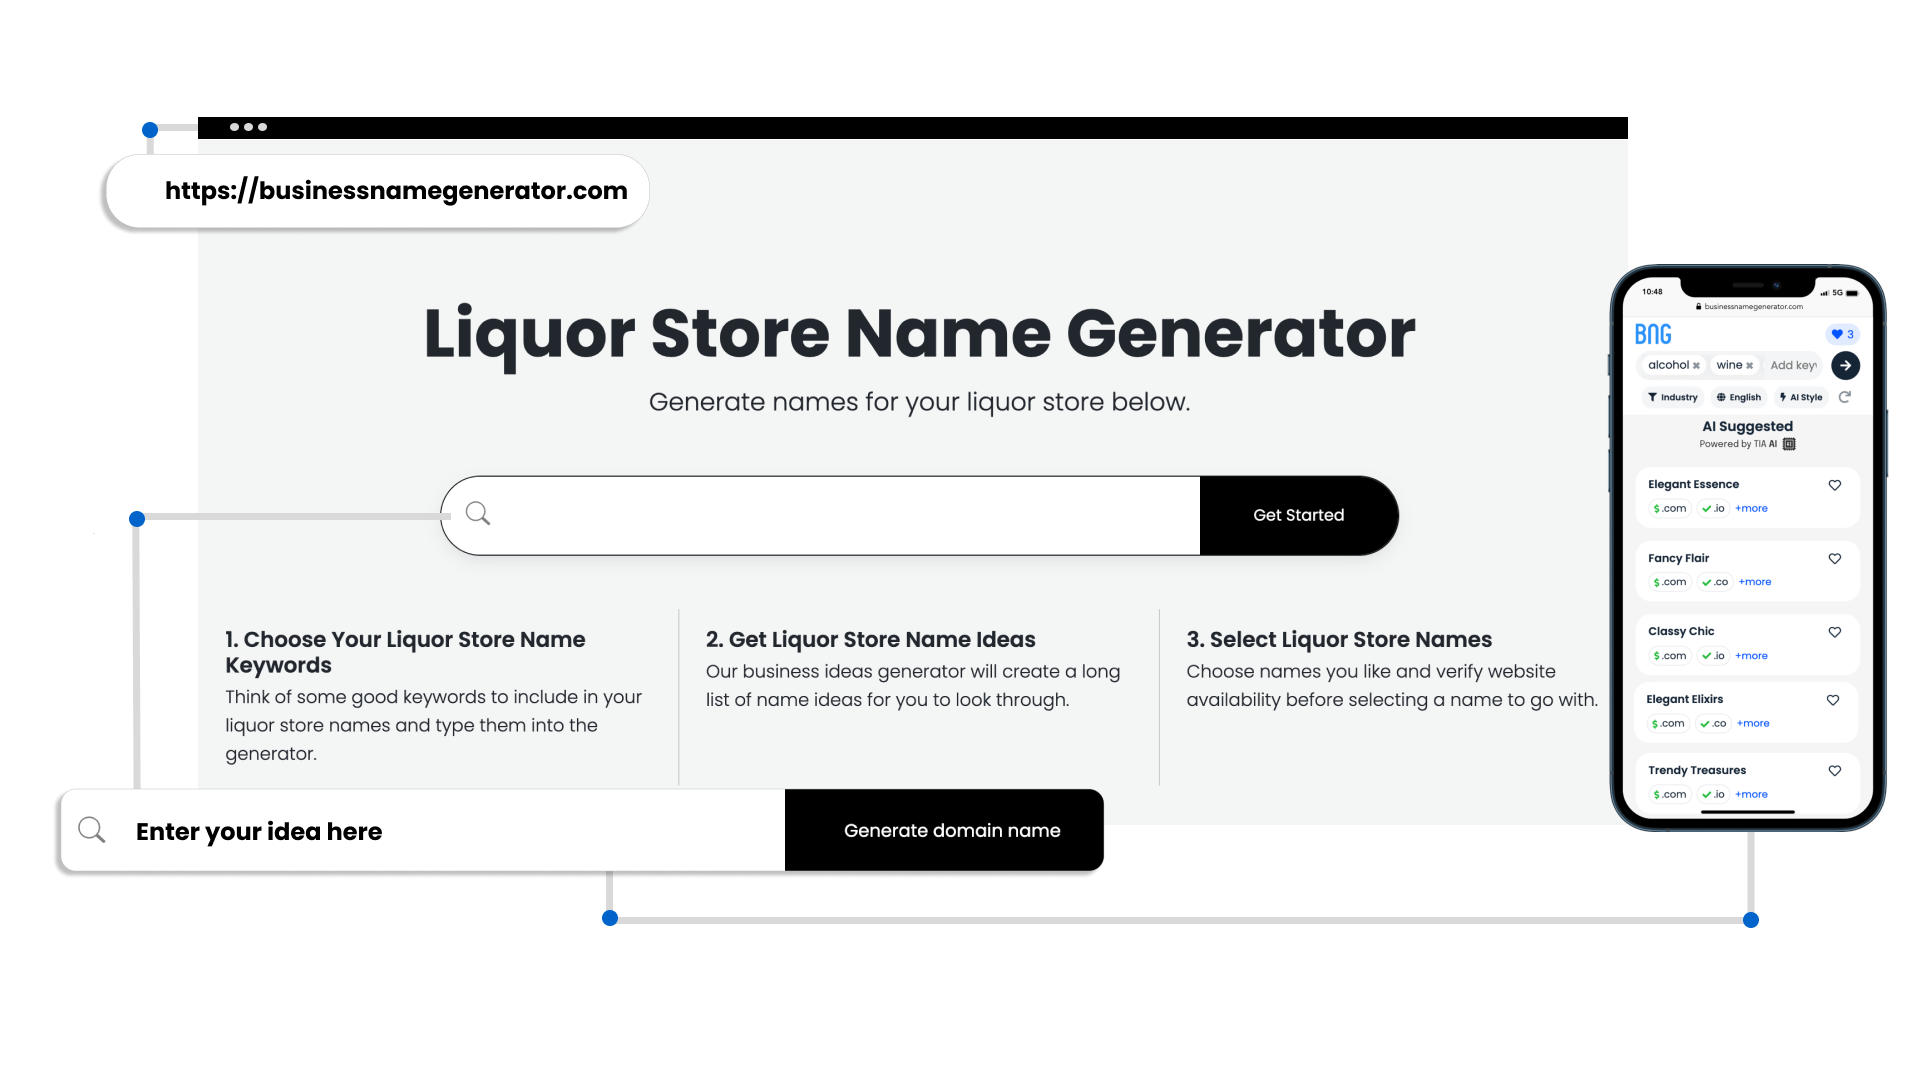 Benefits of Our Liquor Shop Name Generator